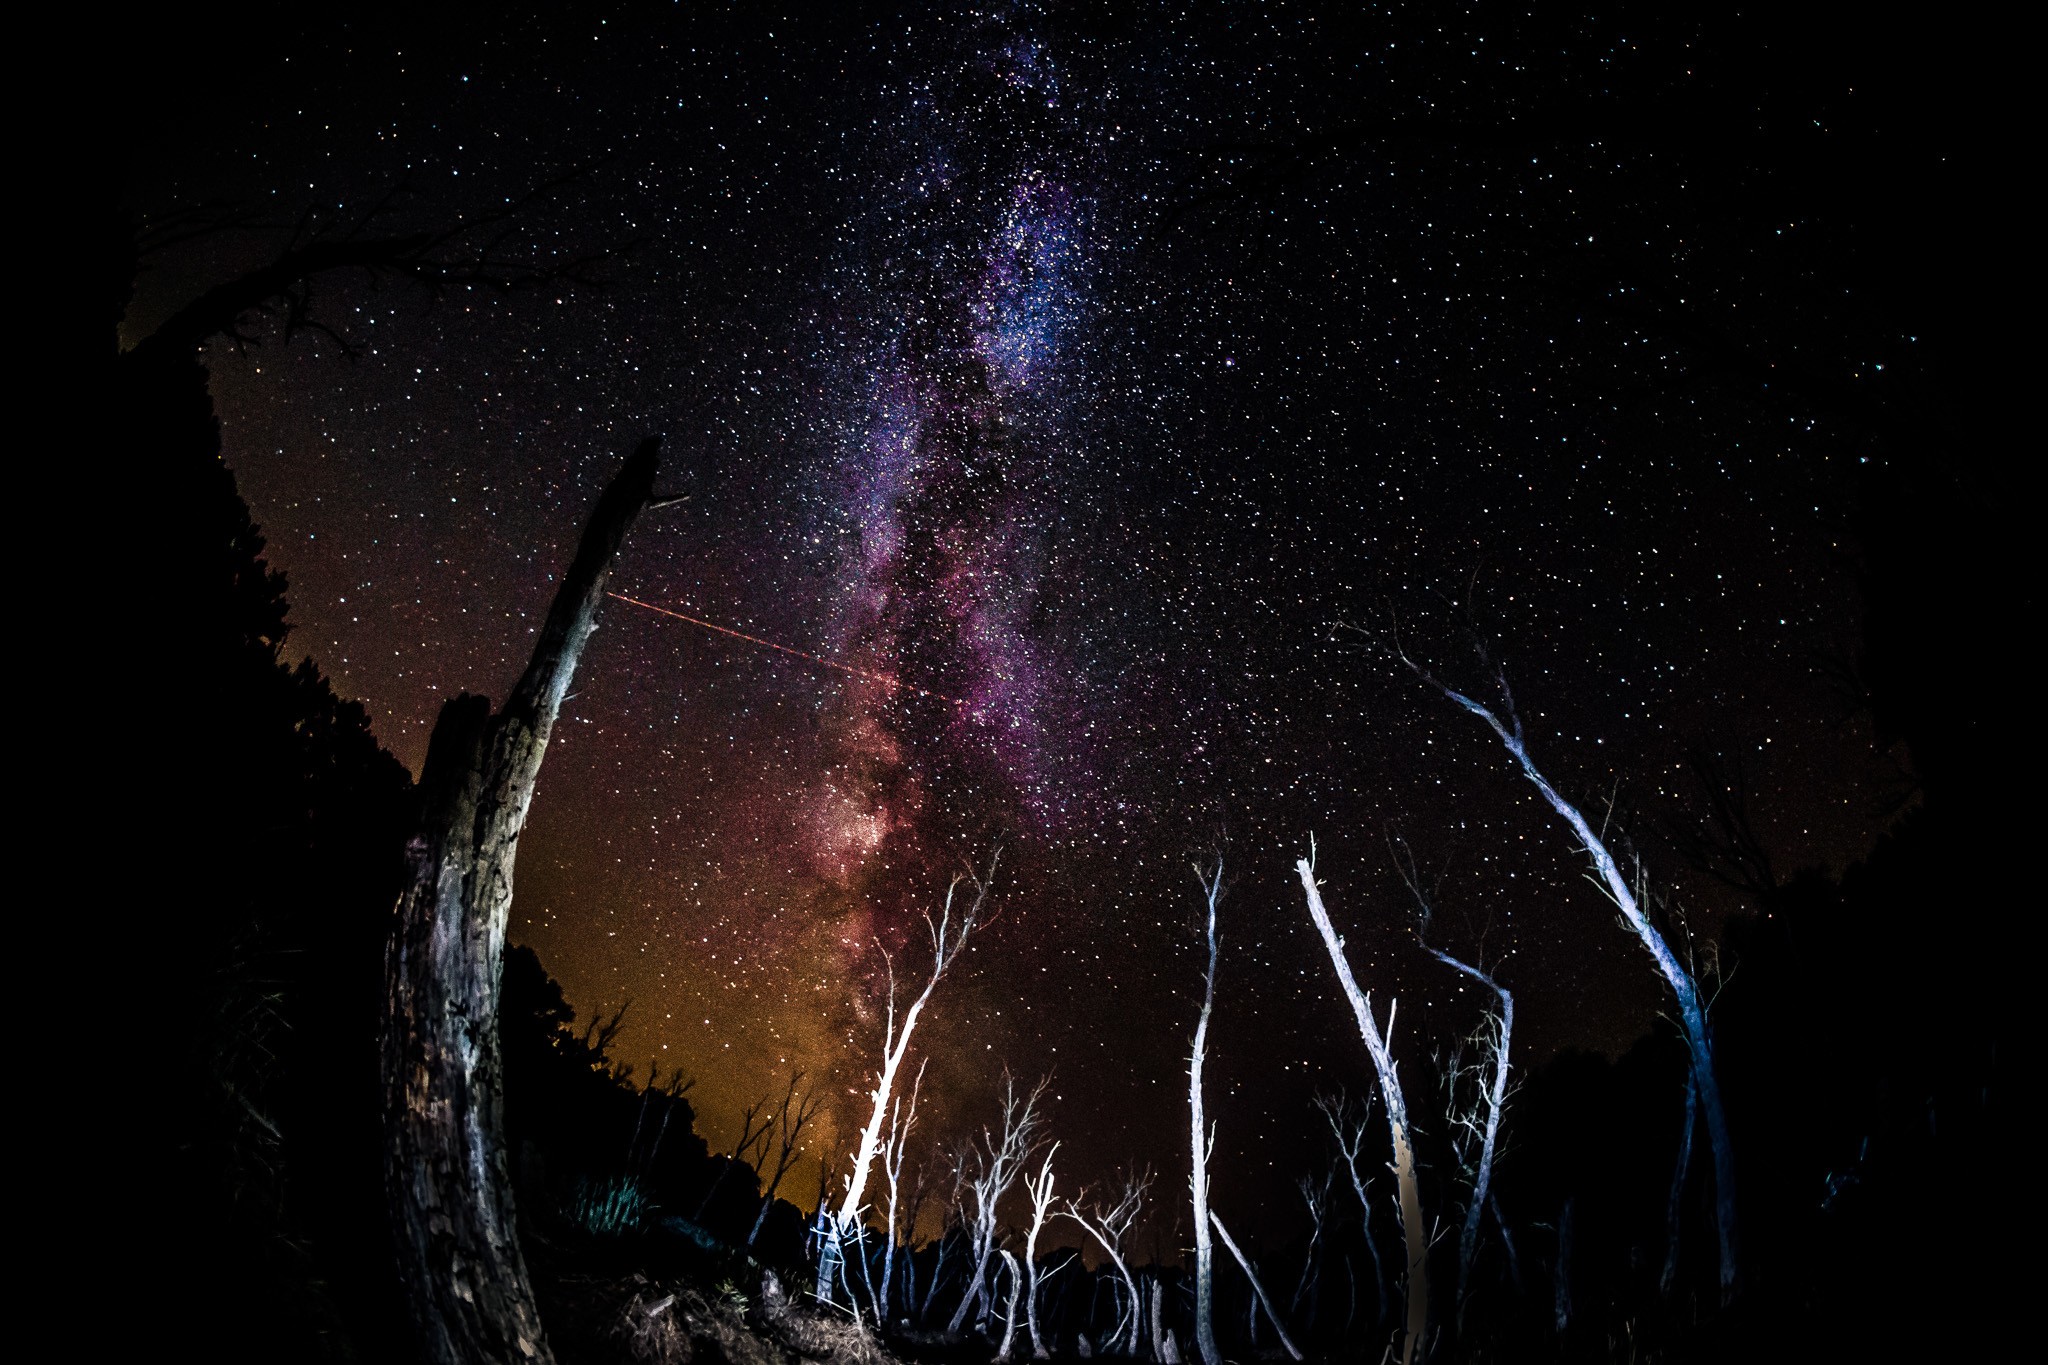 General 2048x1365 stars landscape night sky looking up sky nature outdoors night dark